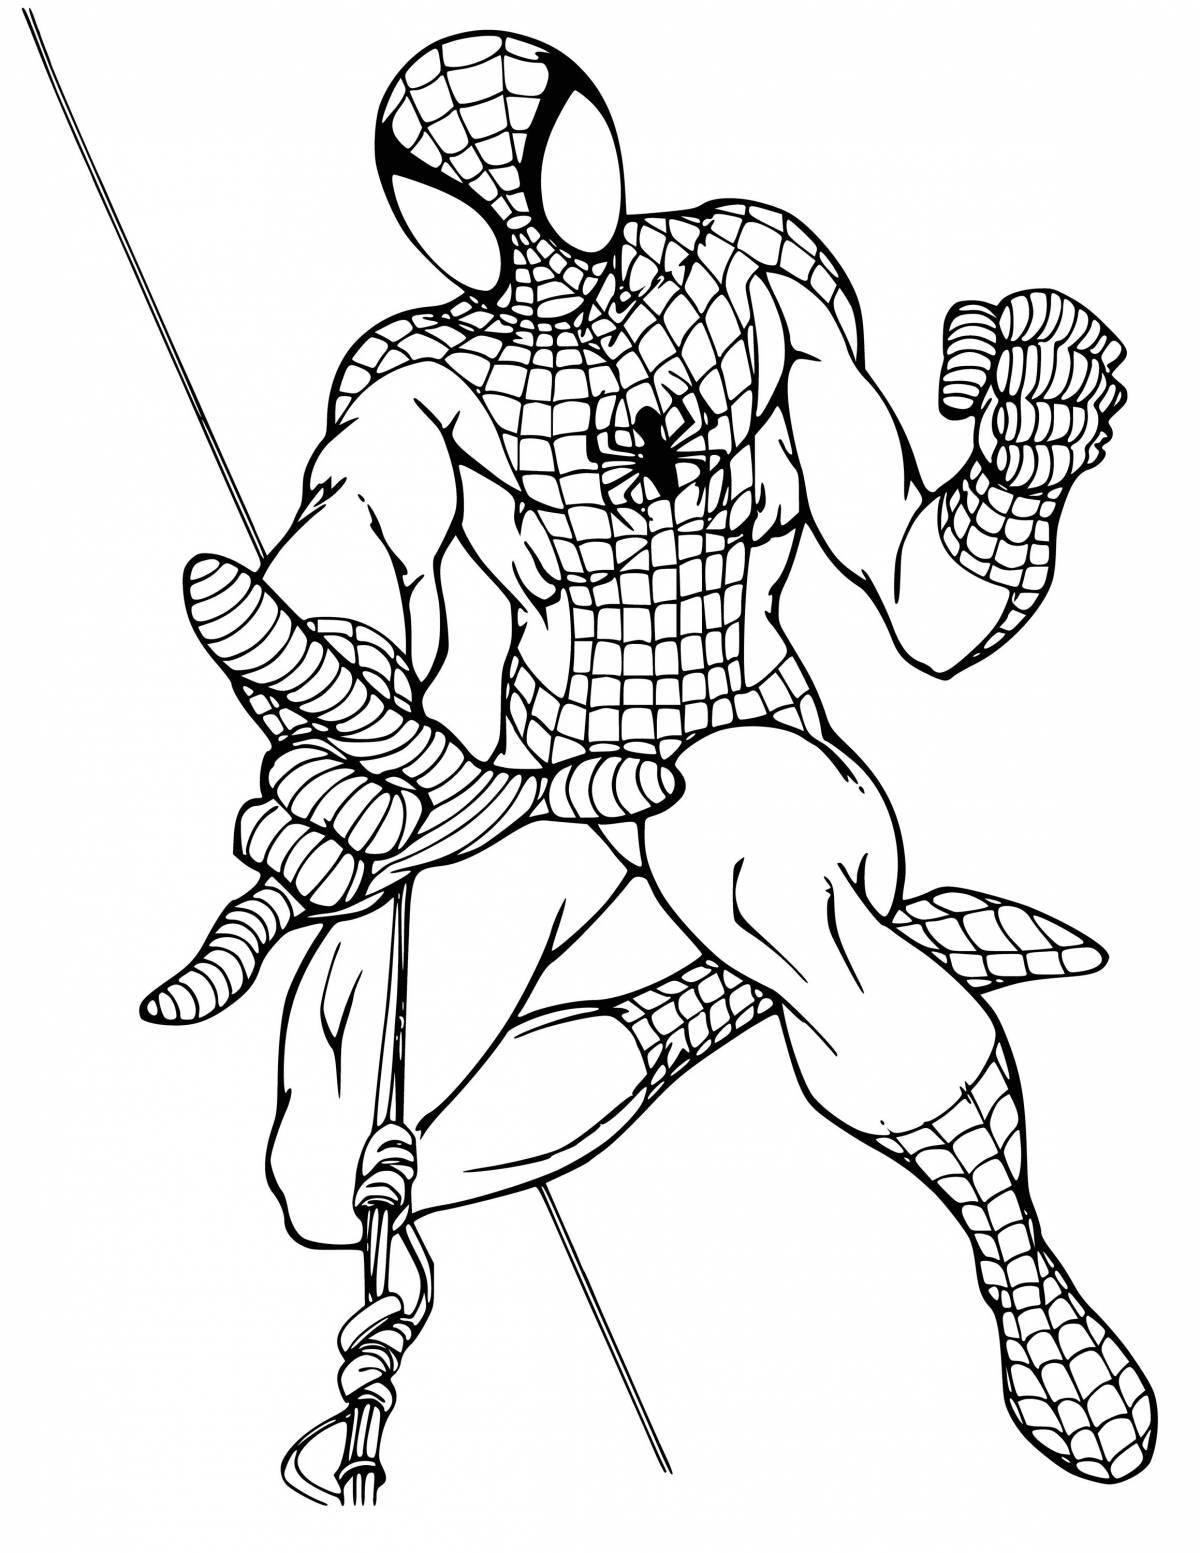 Wonderful cartoon spider-man coloring book